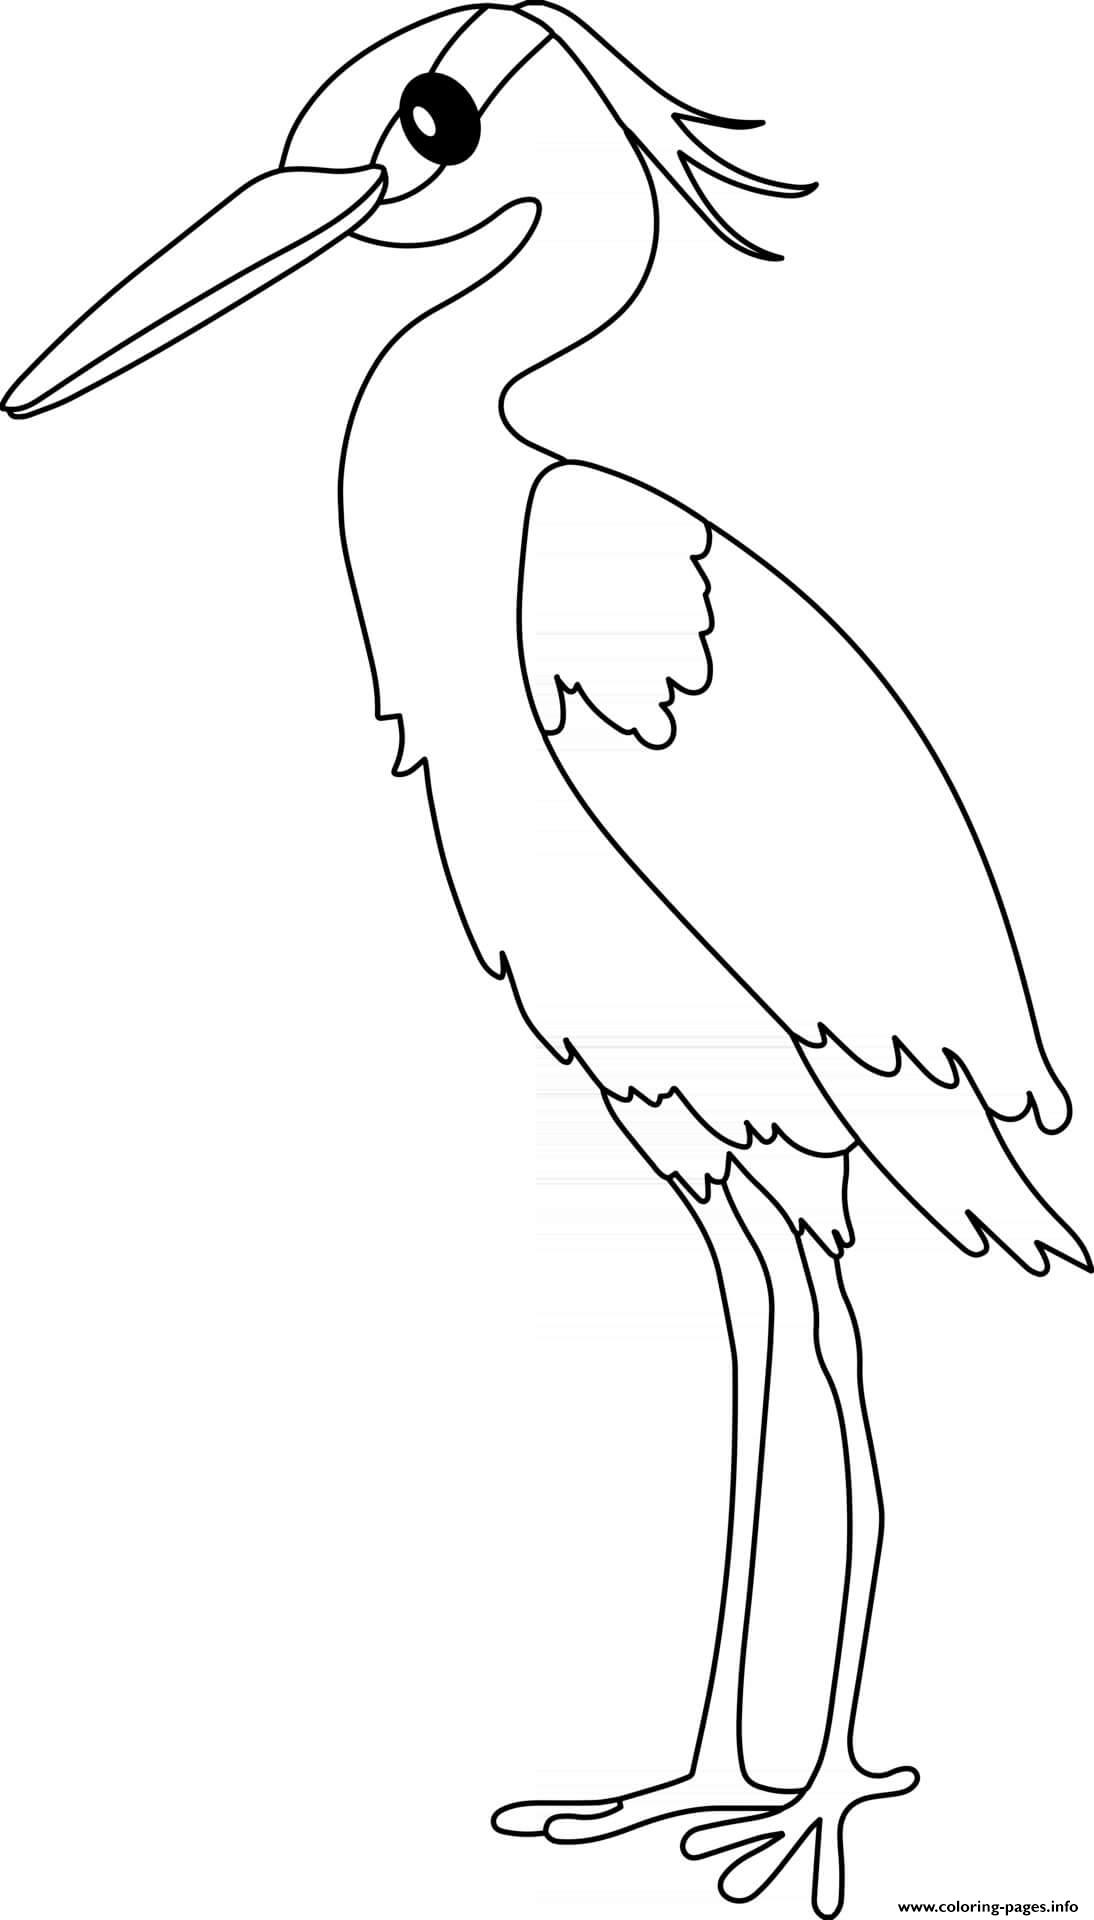 heron-bird-coloring-page-printable